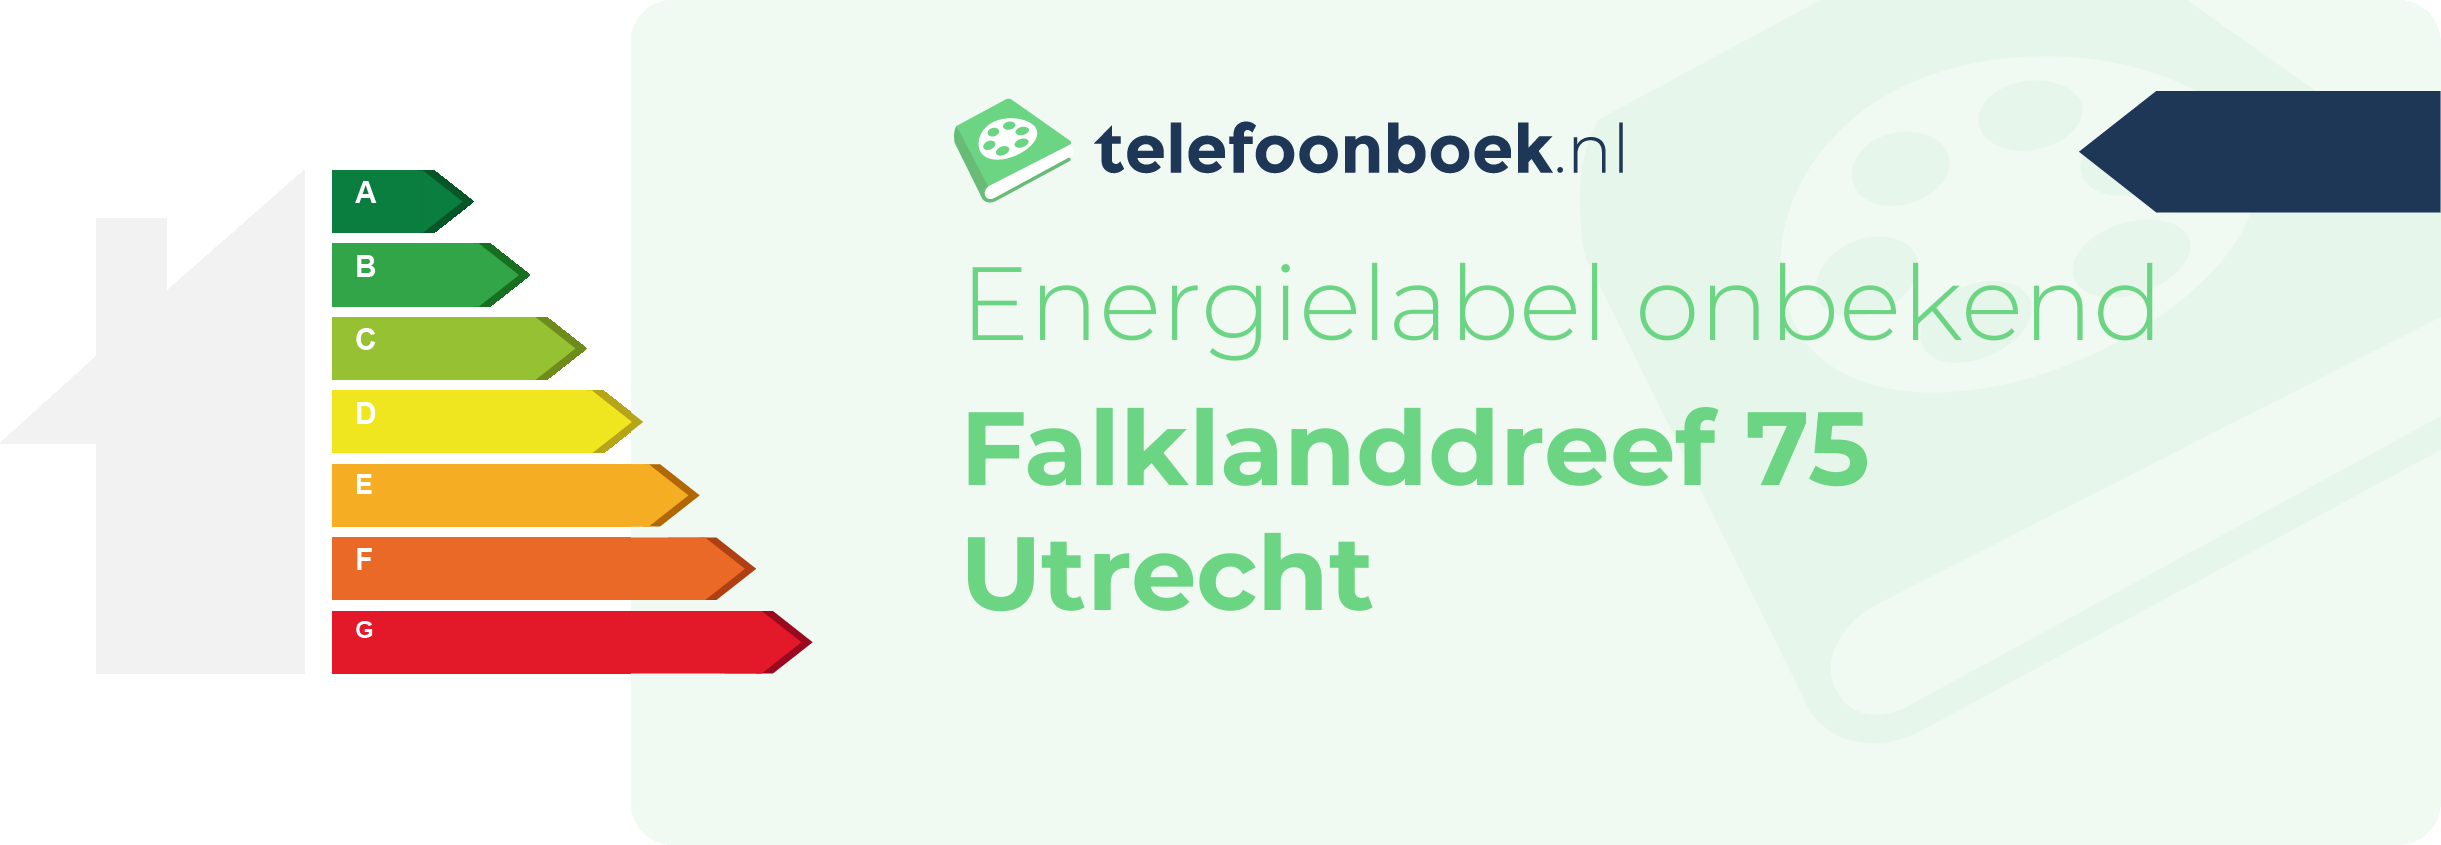 Energielabel Falklanddreef 75 Utrecht